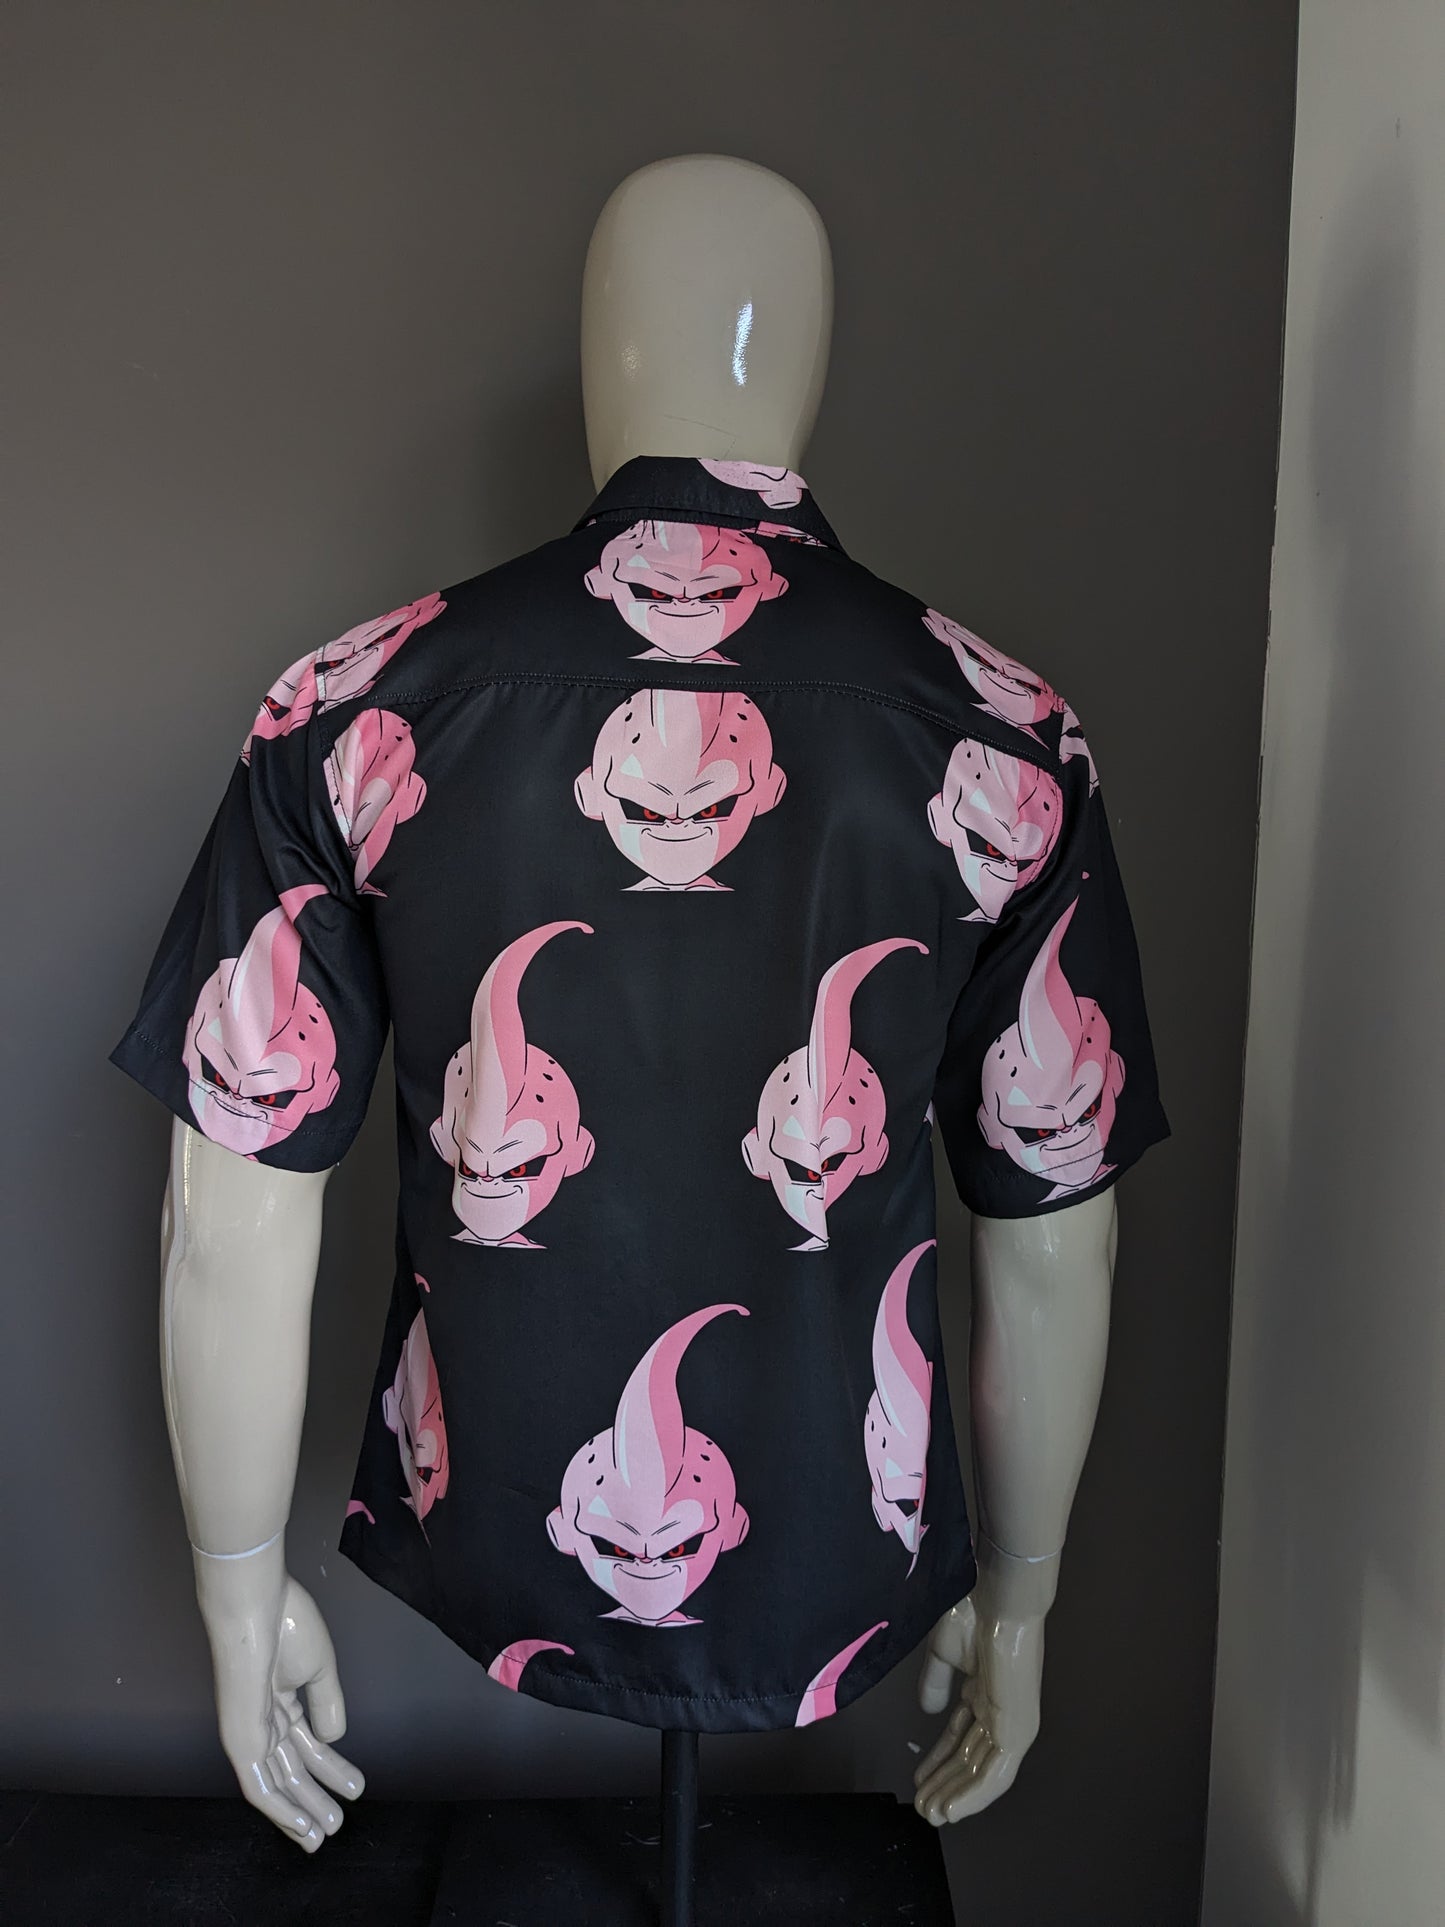 Dragon Ball Z Kid Buu Print shirt. Black pink print. Size M.